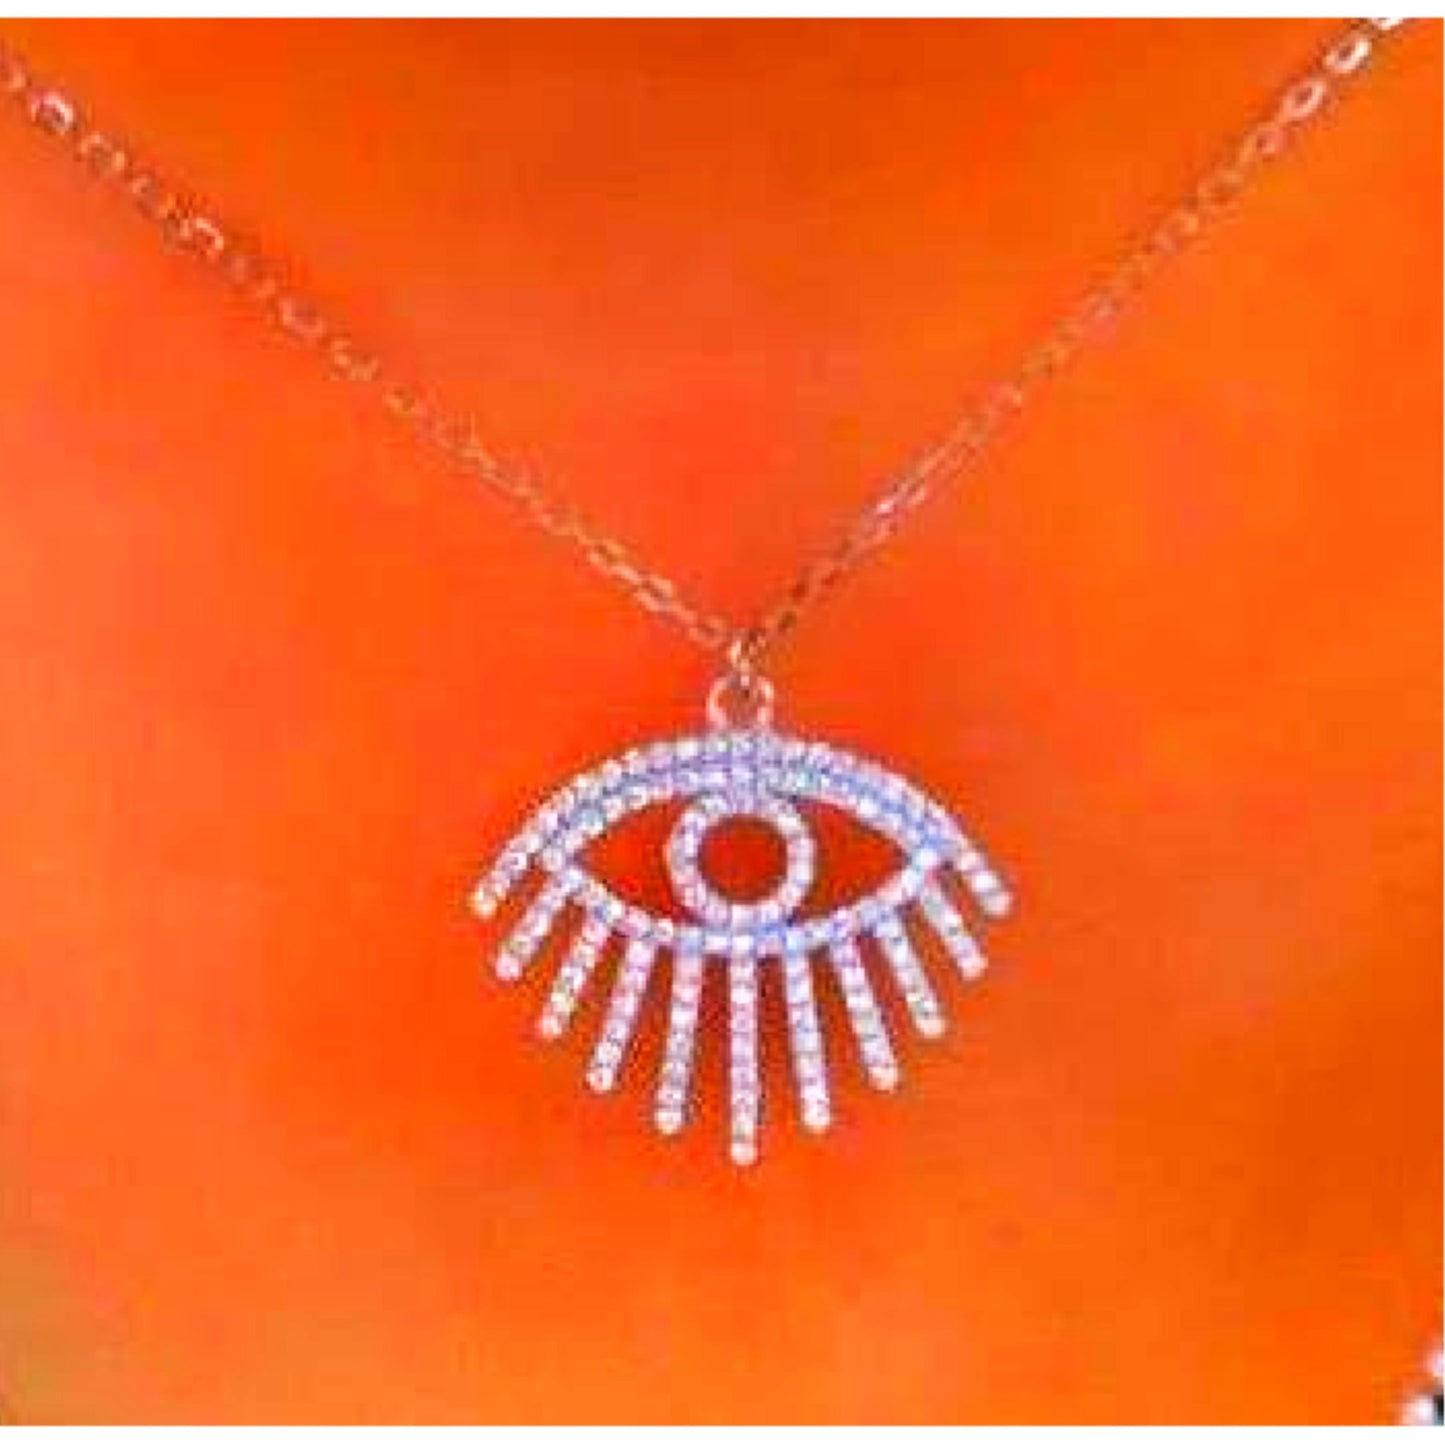 Bluenoemi Jewelry Necklaces silver Bluenoemi Eye Necklace Sterling Silver Israeli Necklace for Woman. Protection symbol.